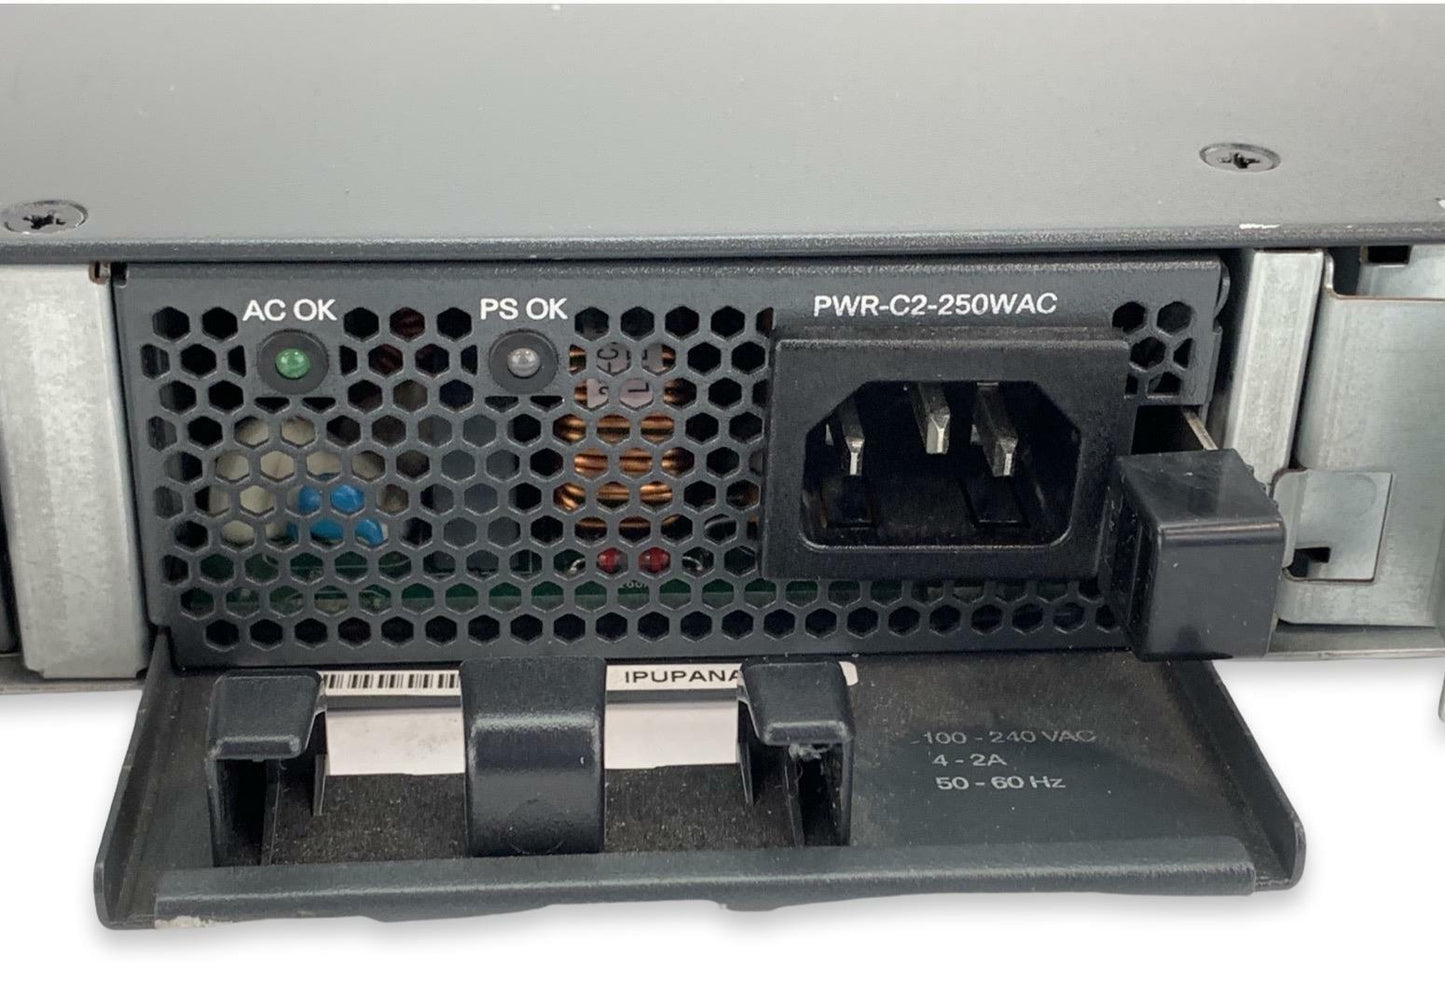 Cisco Catalyst 3650 Series WS-C3650-24TD-E V03 24-Port Gigabit Network Switch